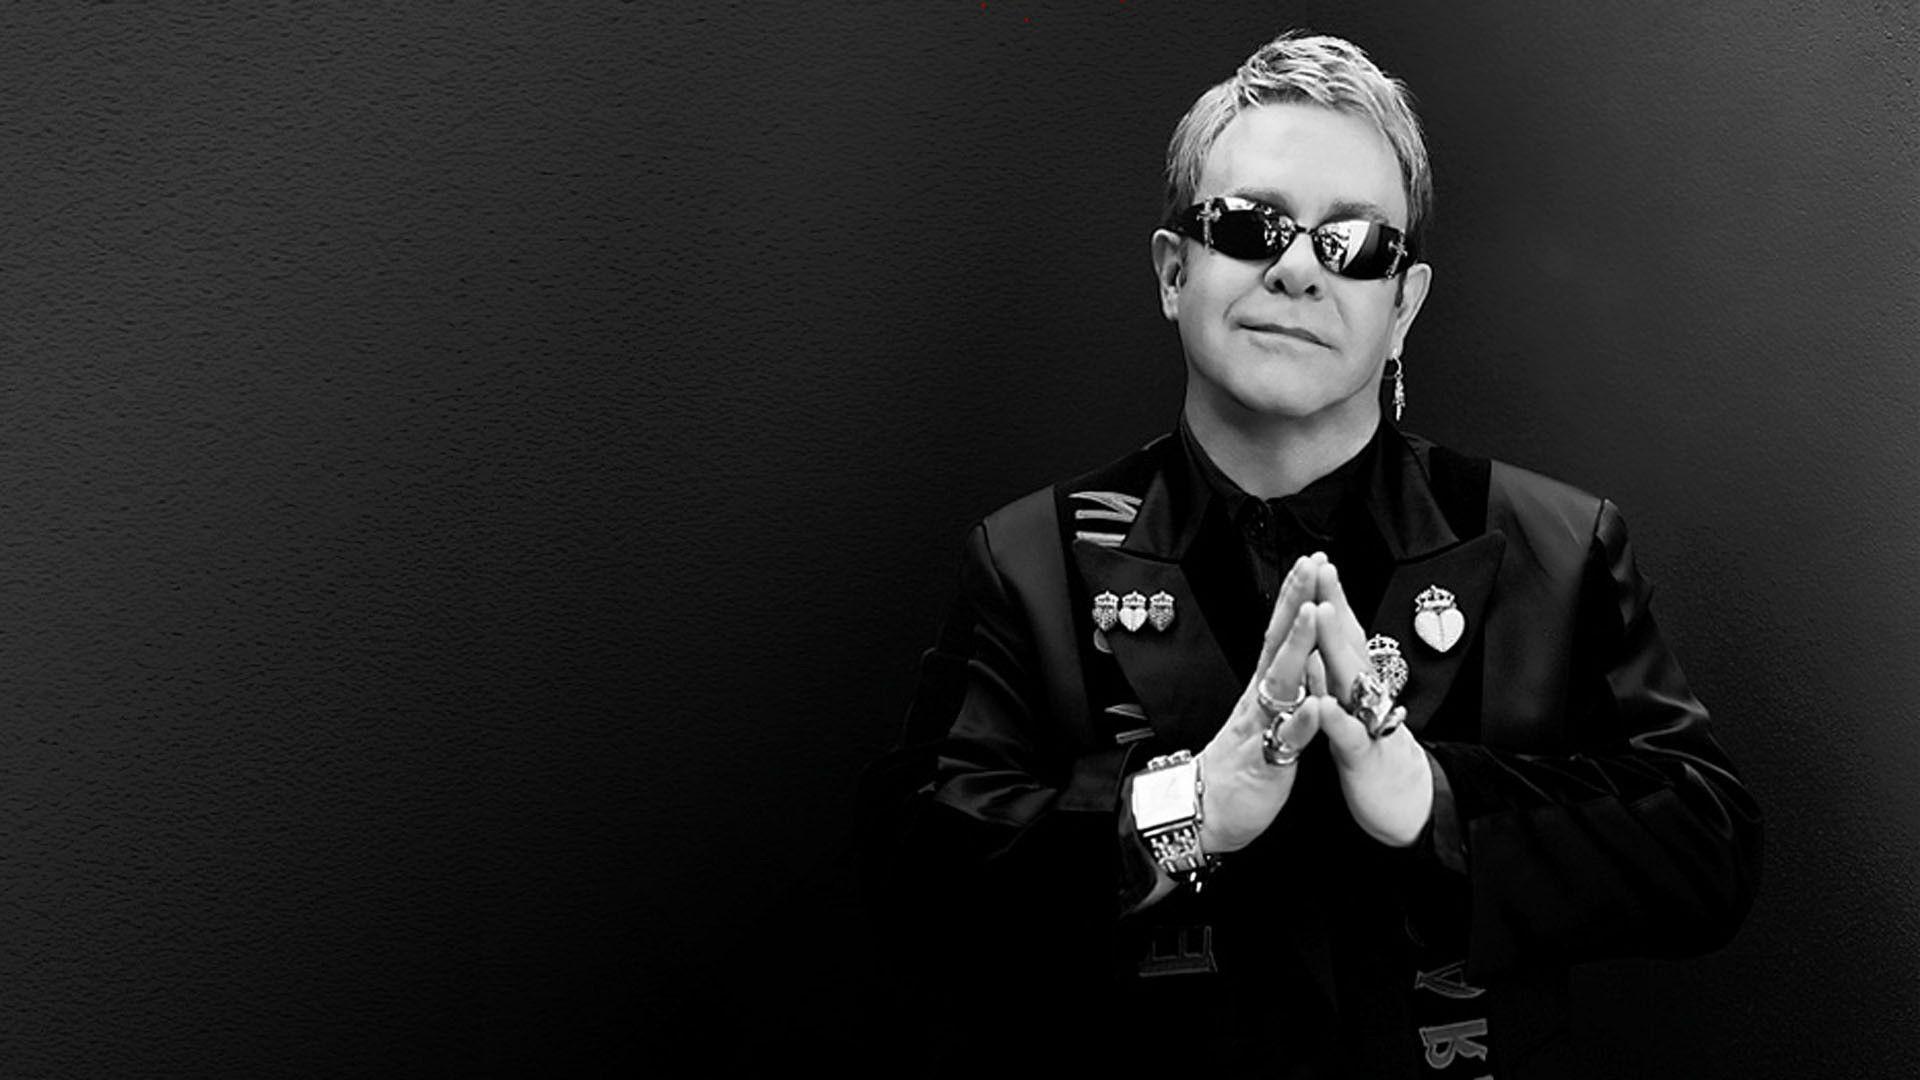 Elton John Wallpaper, Elton John HDQ Picture, Free Download